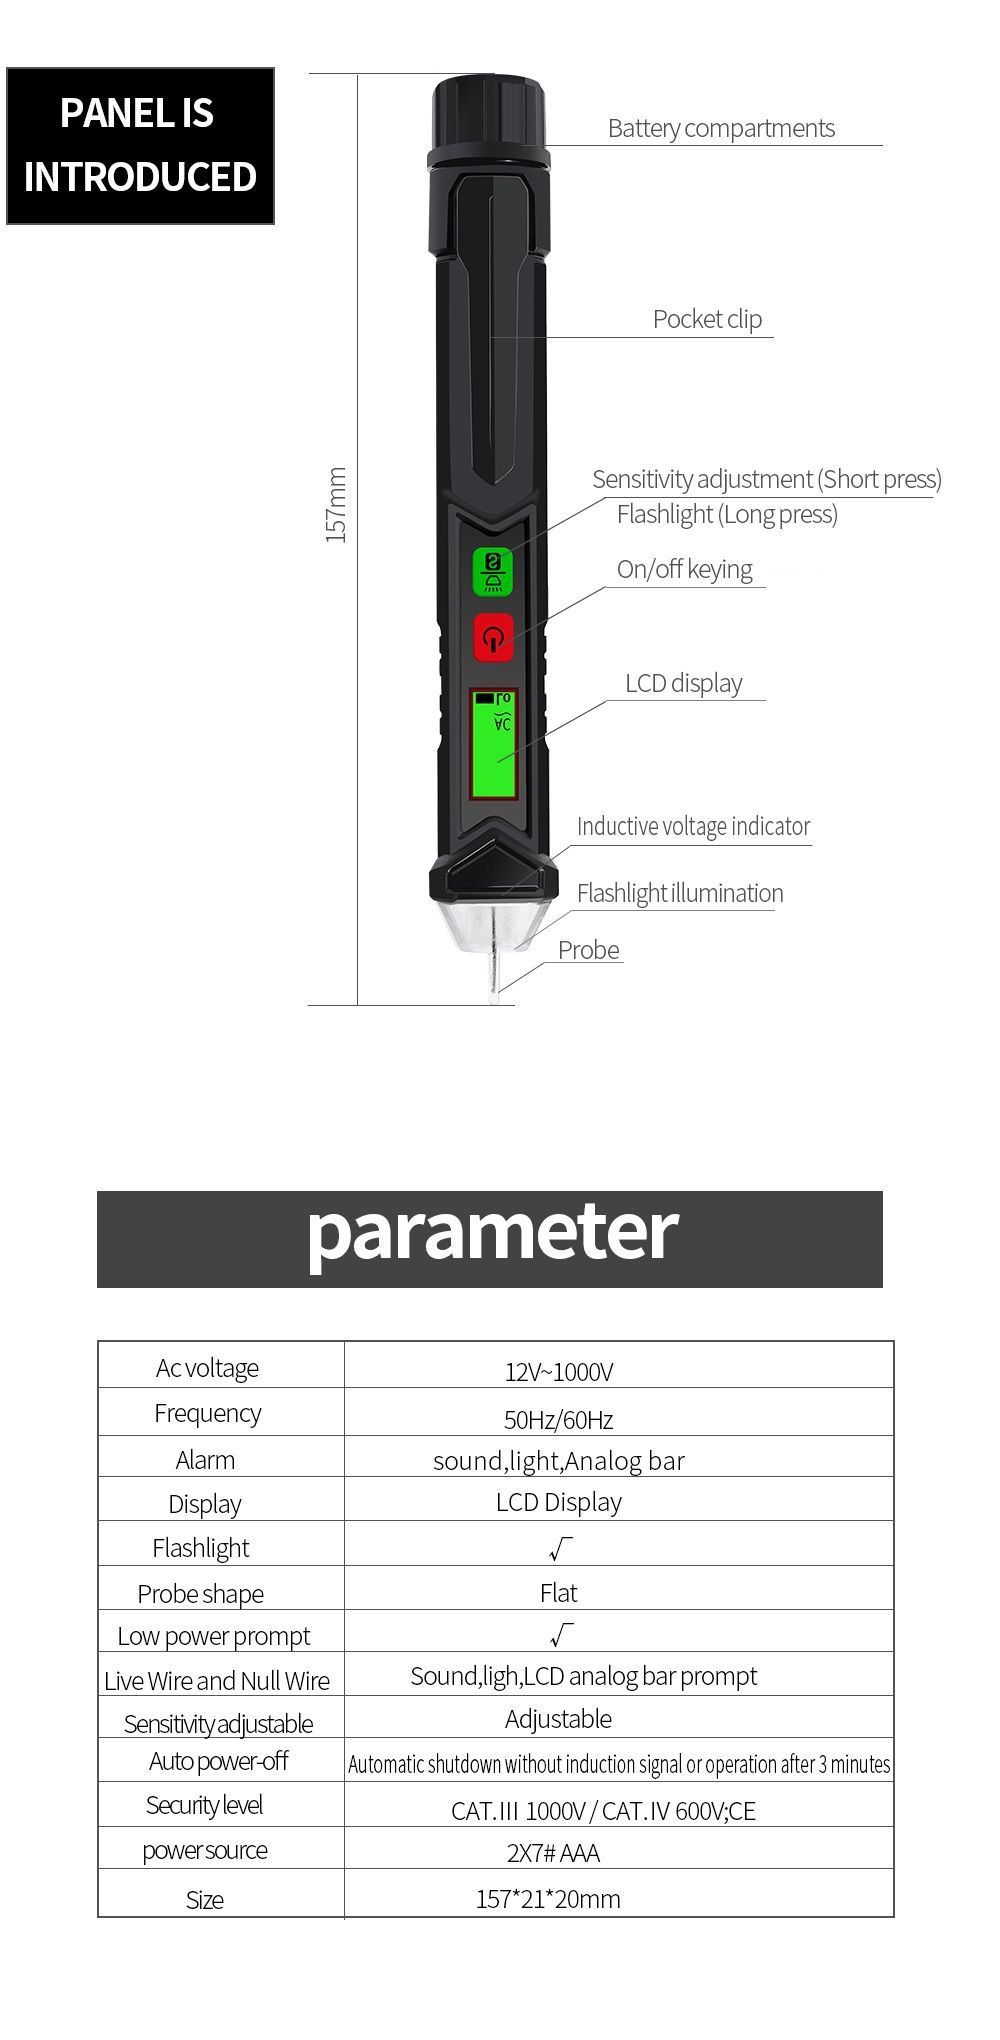 HT106B-US-Plug-Socket-Outlet-Tester-Circuit-Polarity-Voltage-Detector-Wall-Plug-Breaker-Finder-RCD-T-1389531